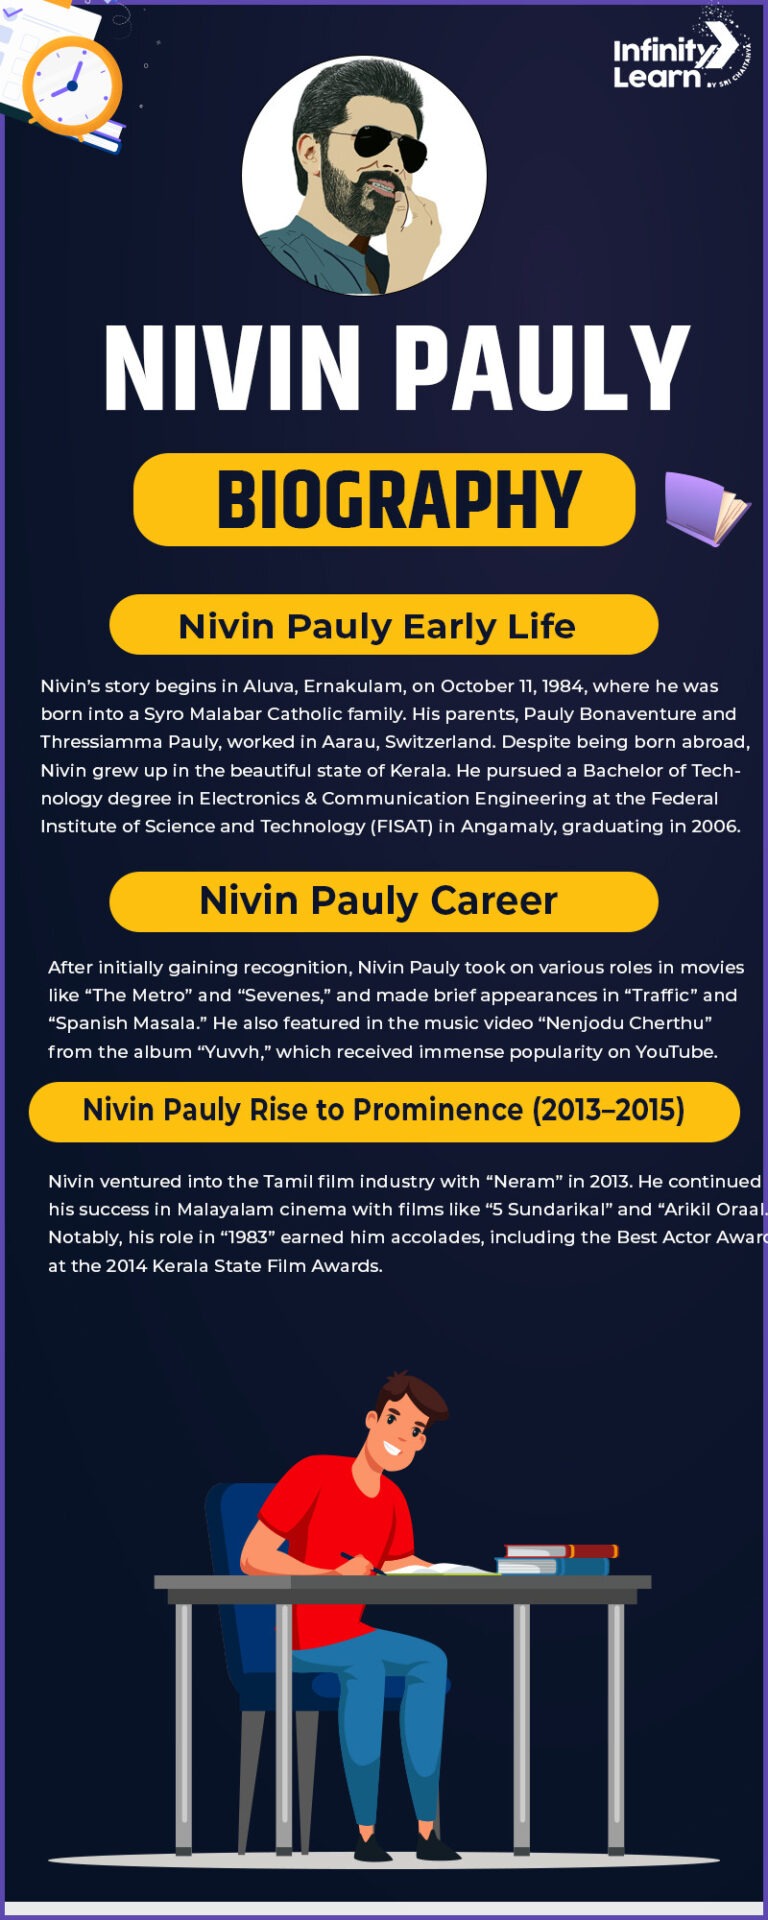 Nivin Pauly Biography